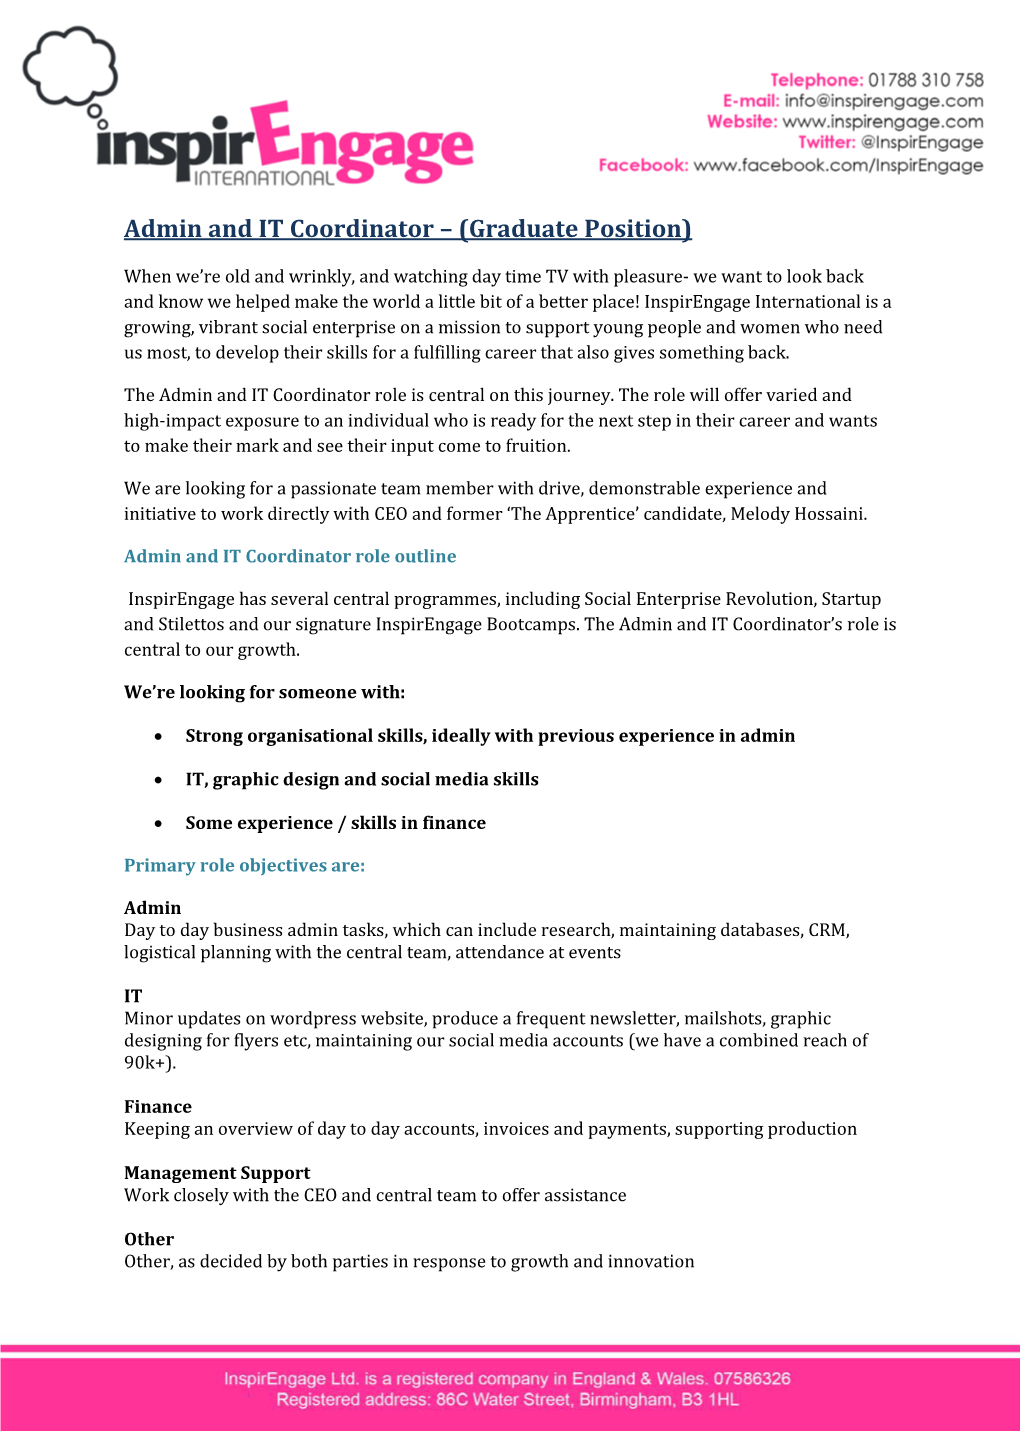 Inspirengage Admin and IT Coordinator Graduate Role (PDF